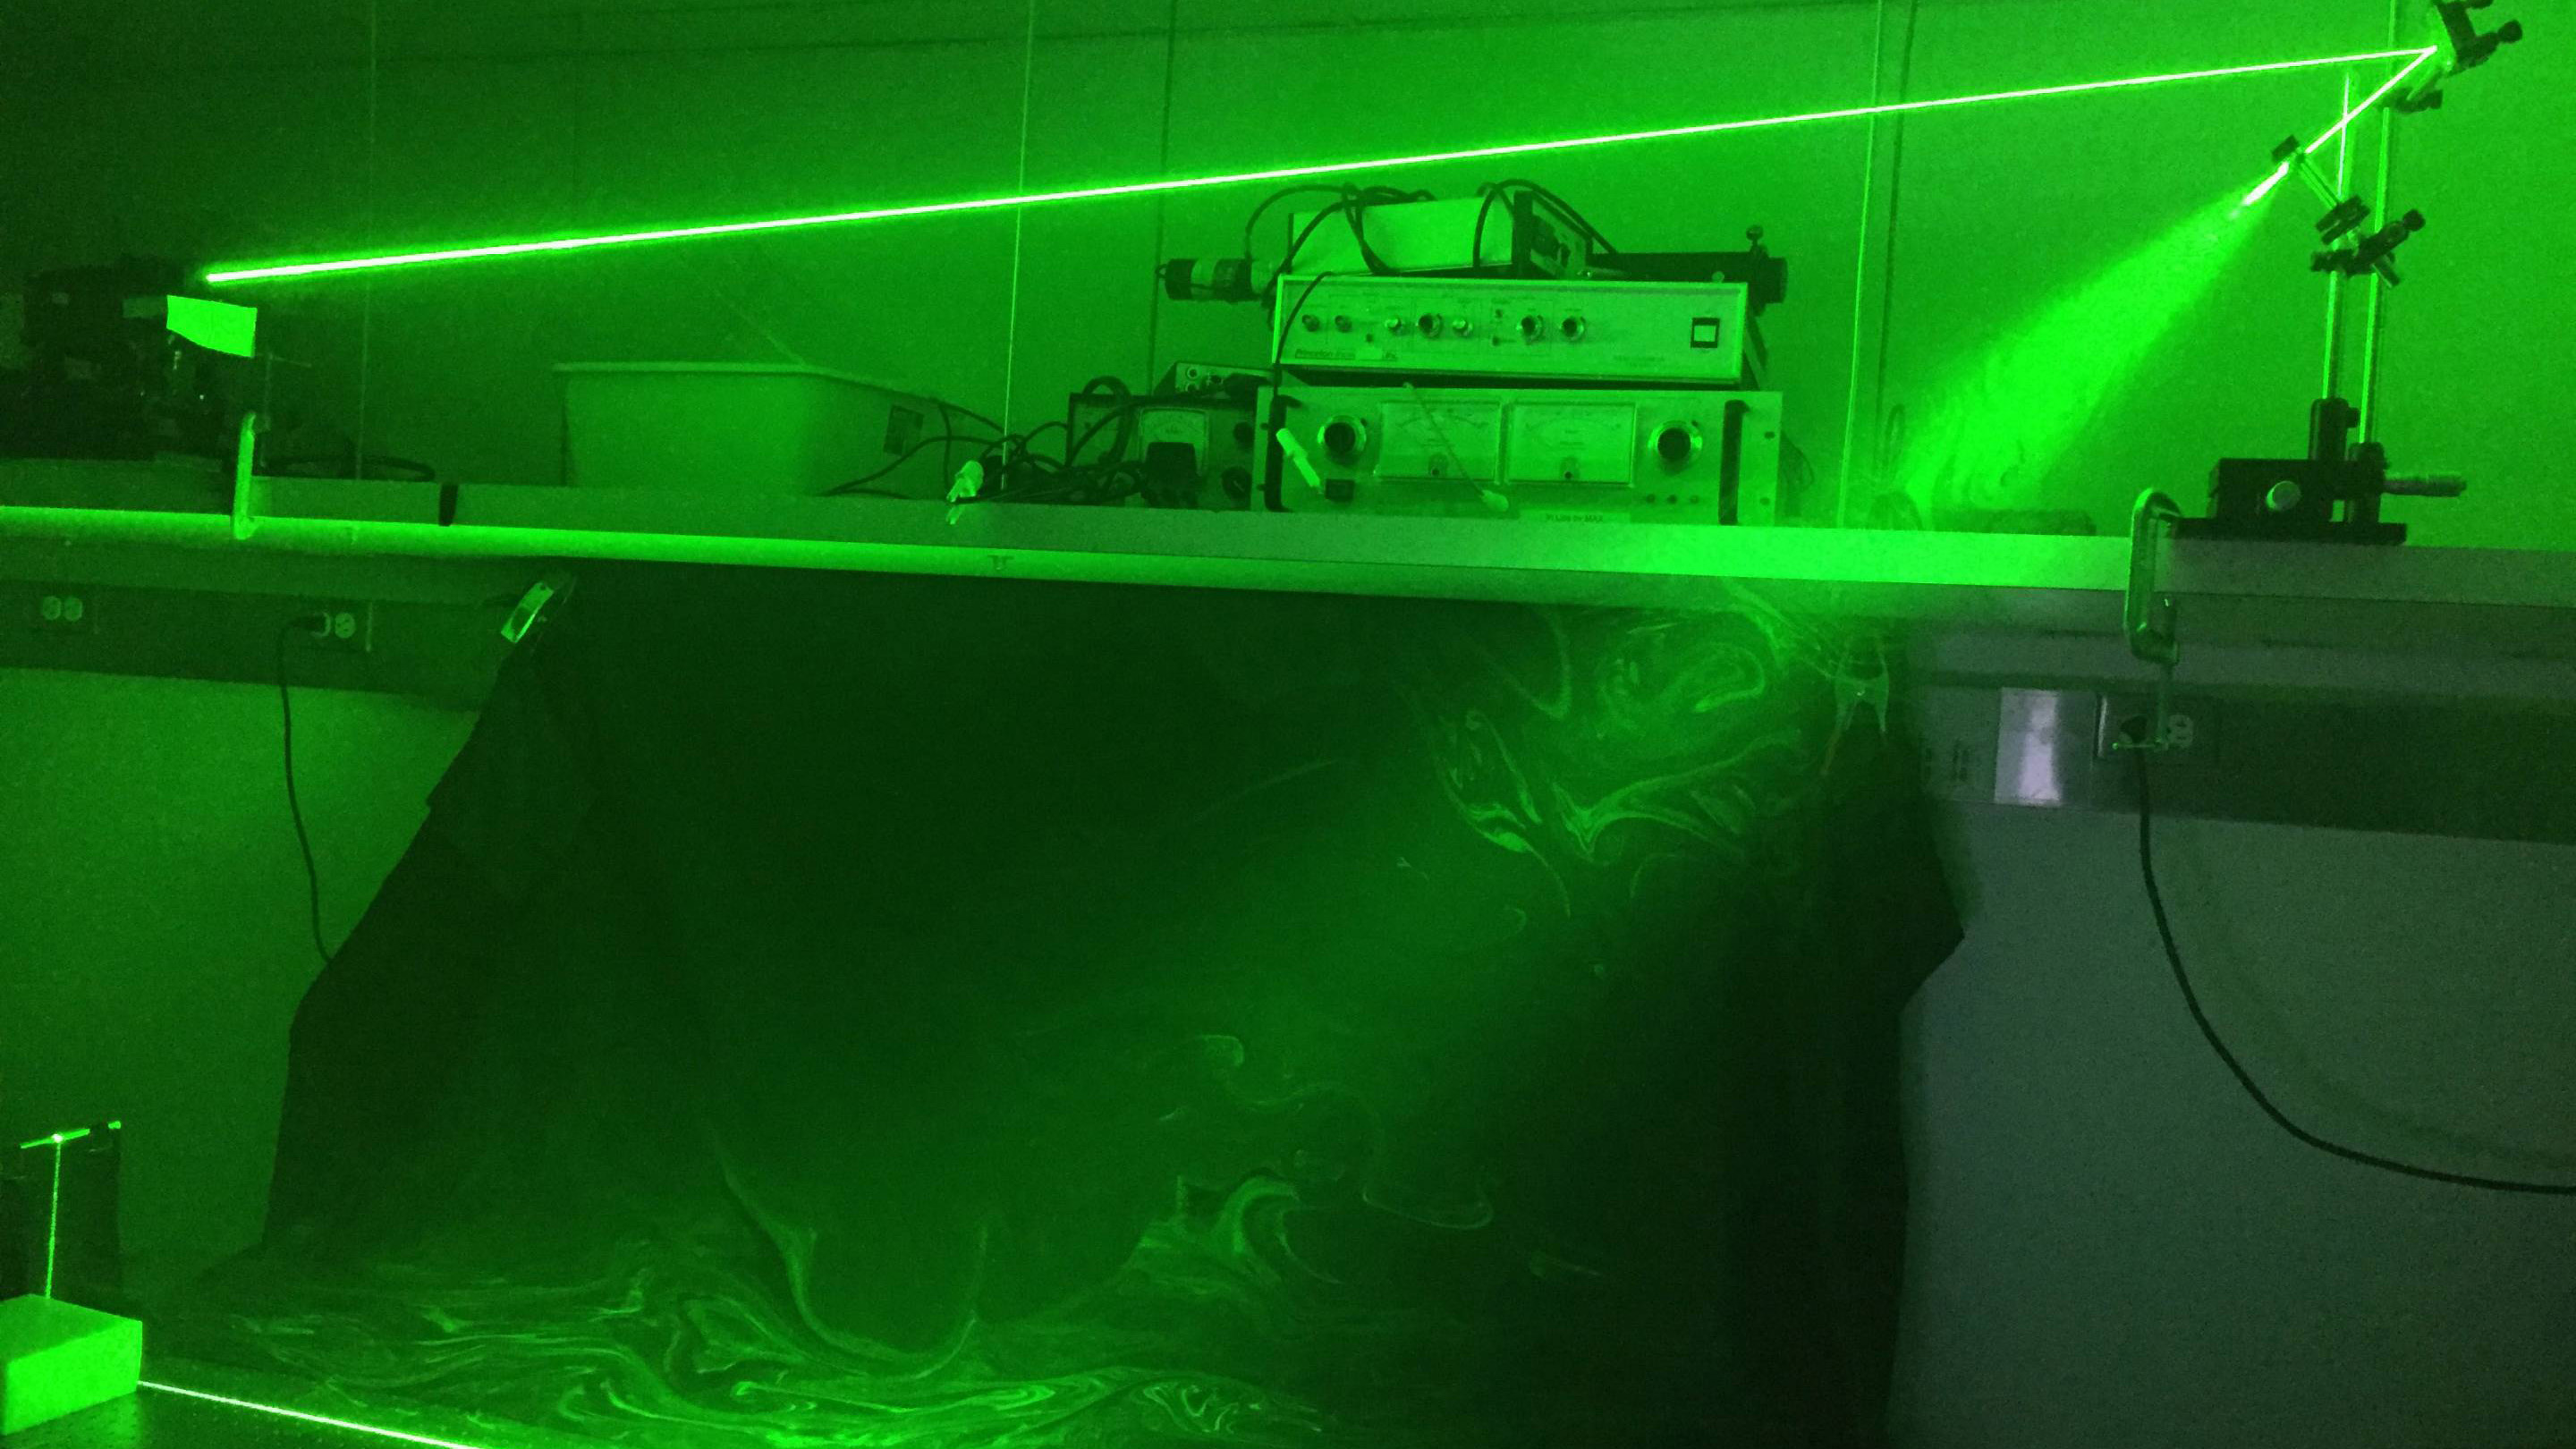 Green laser beam illuminates swirling flow of droplets